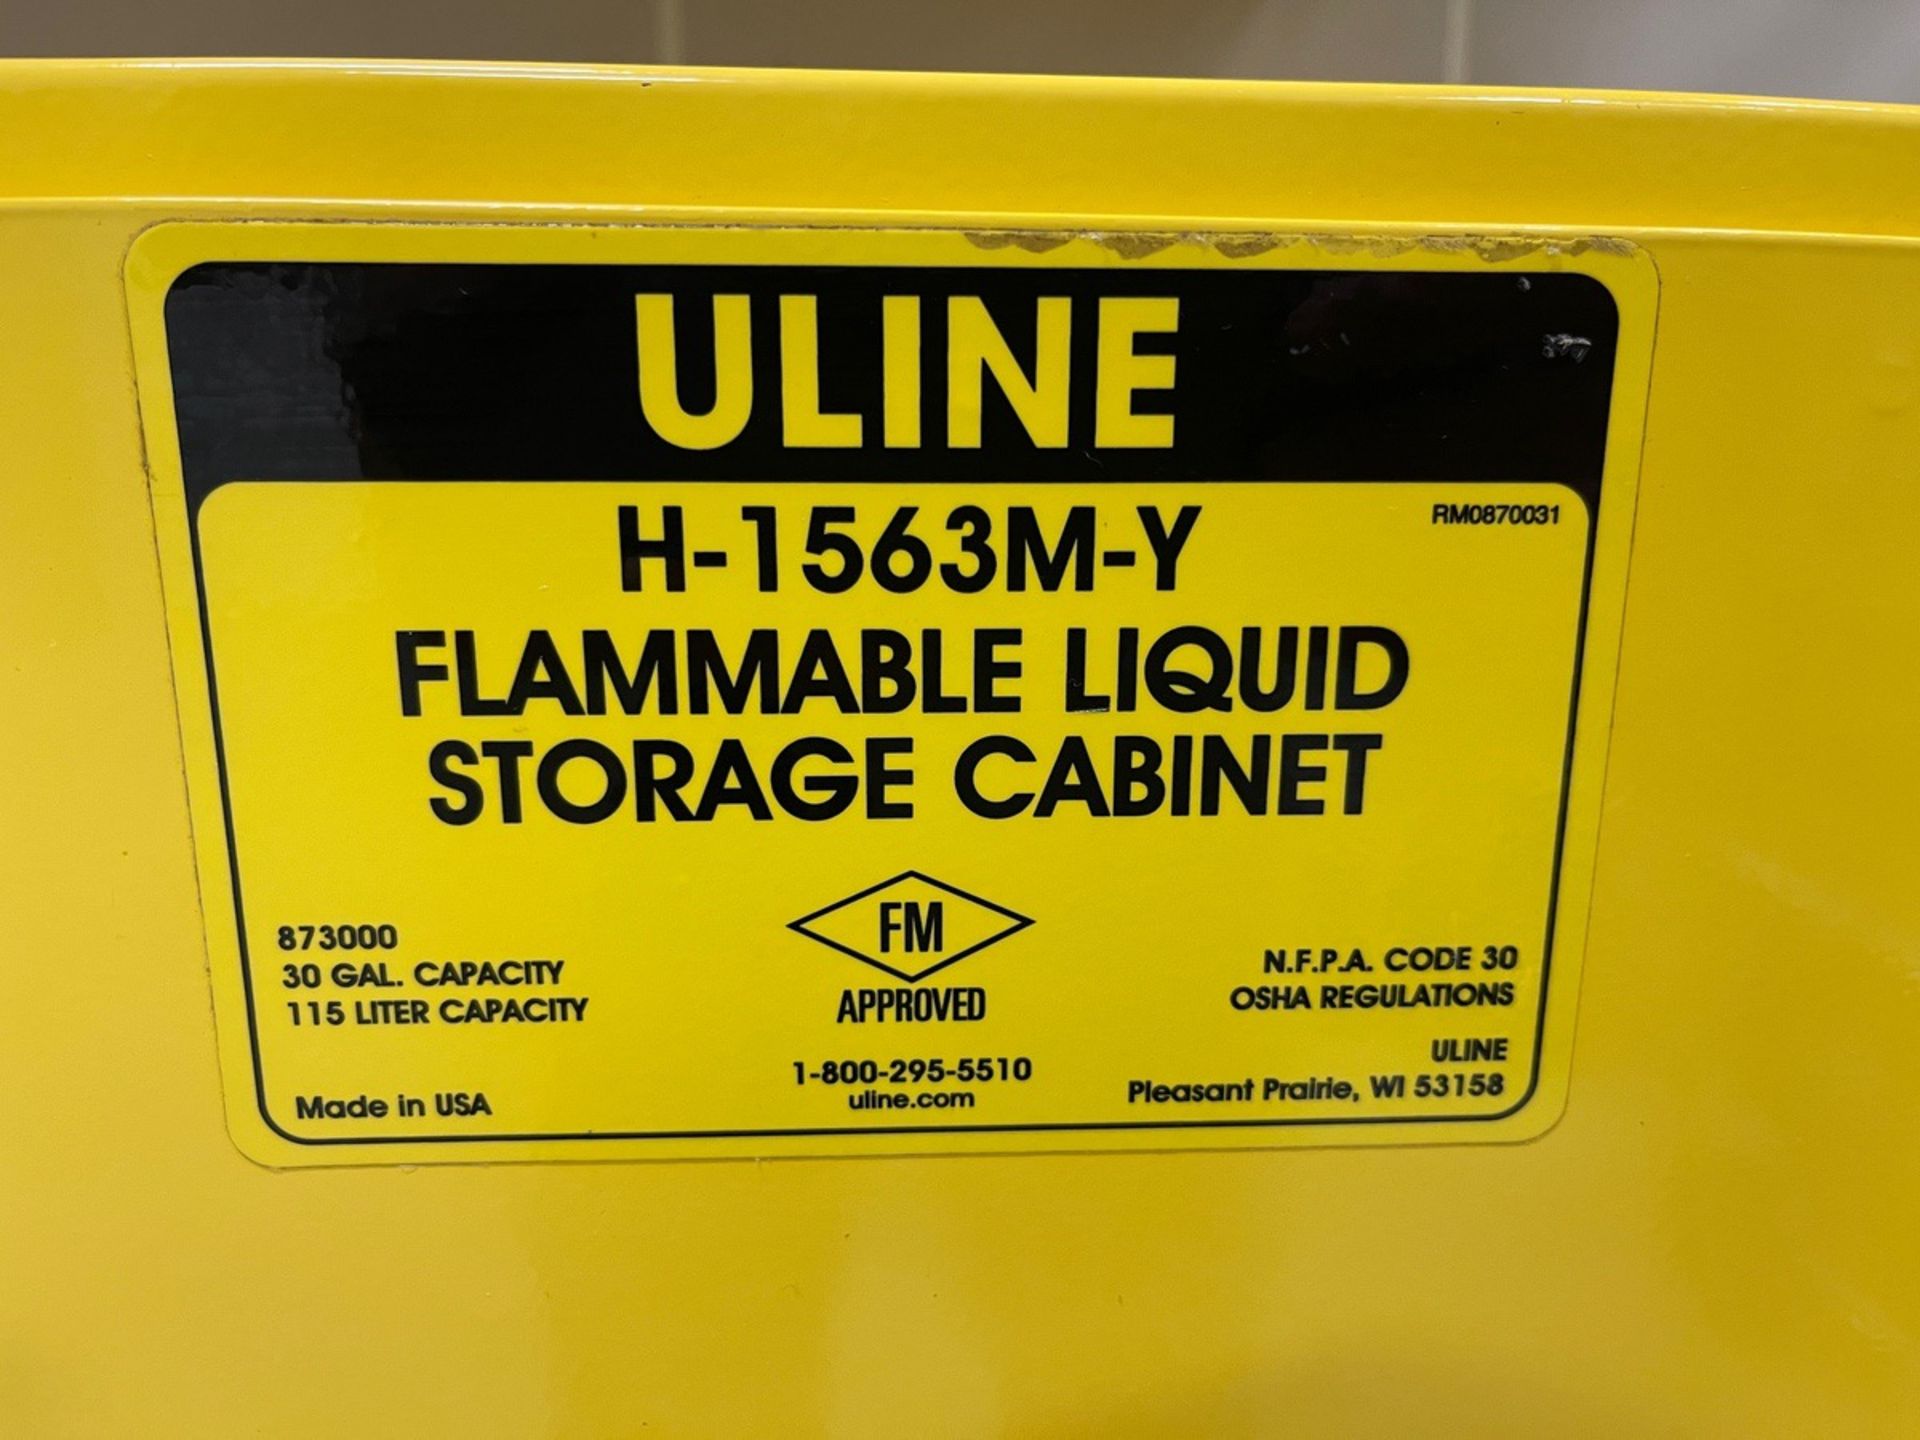 ULINE 30 Gallon Capacity Flammable Liquid Storage Cabinet, Model H-1563M-Y | Rig Fee $100 - Image 2 of 2